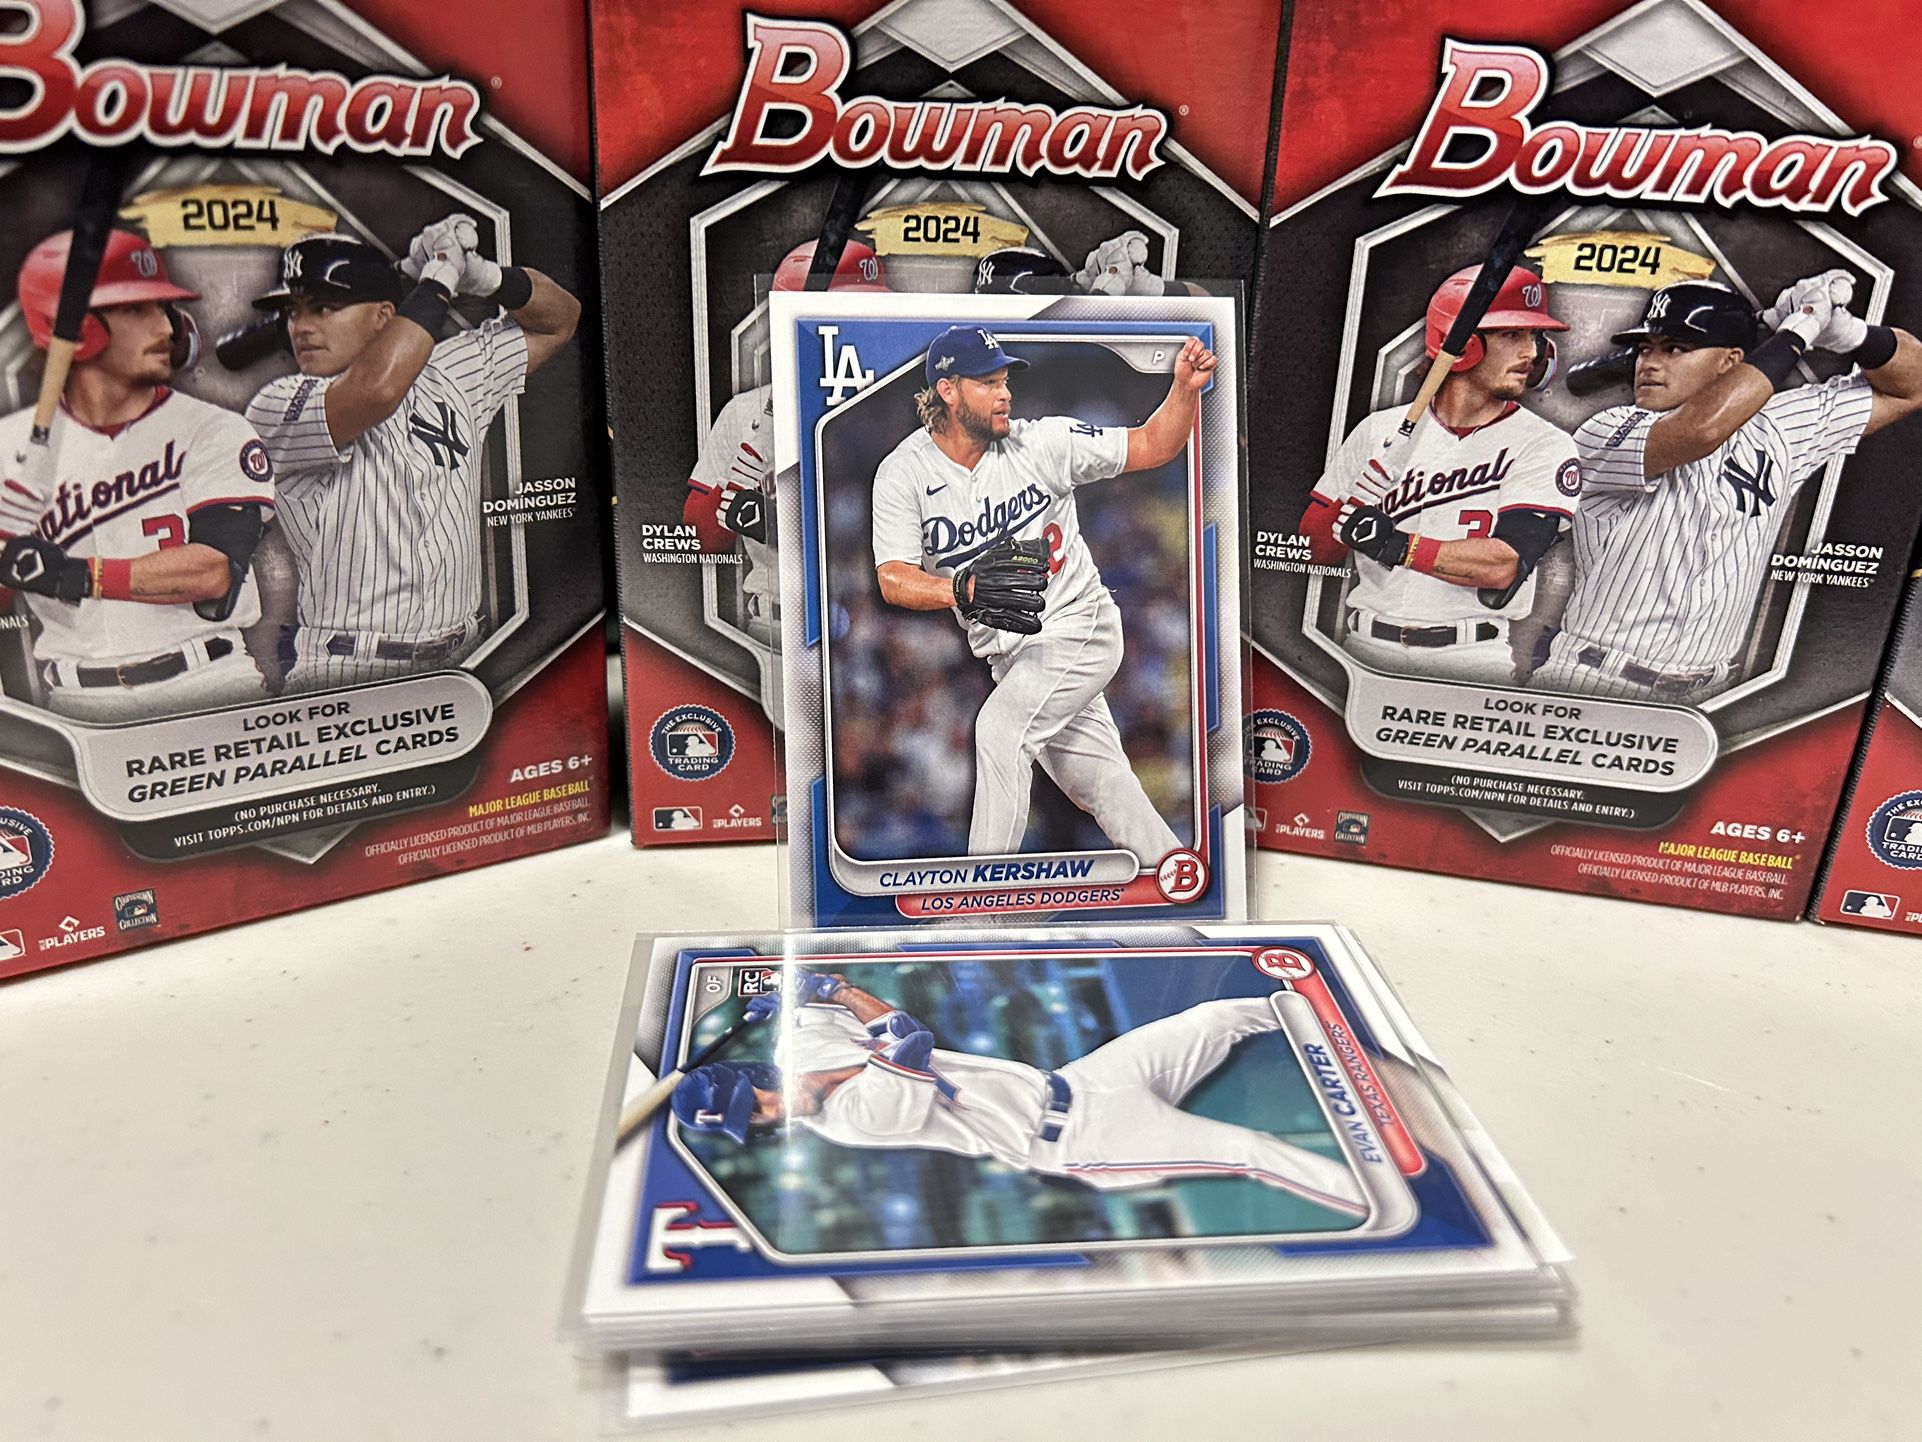 2024 Bowman Baseball Cards (15 Total)